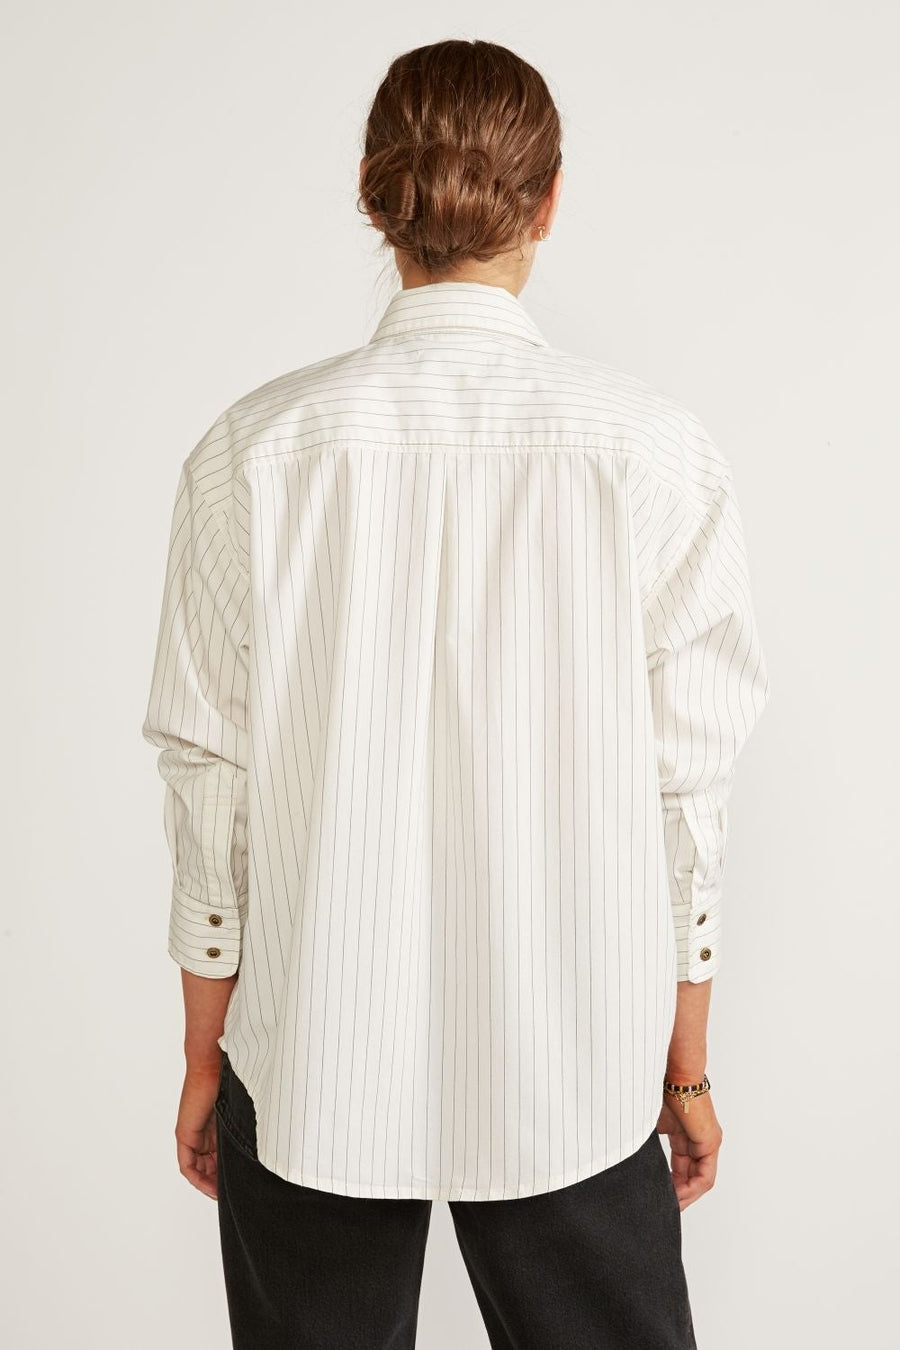 Joni Classic Shirt - wearwell